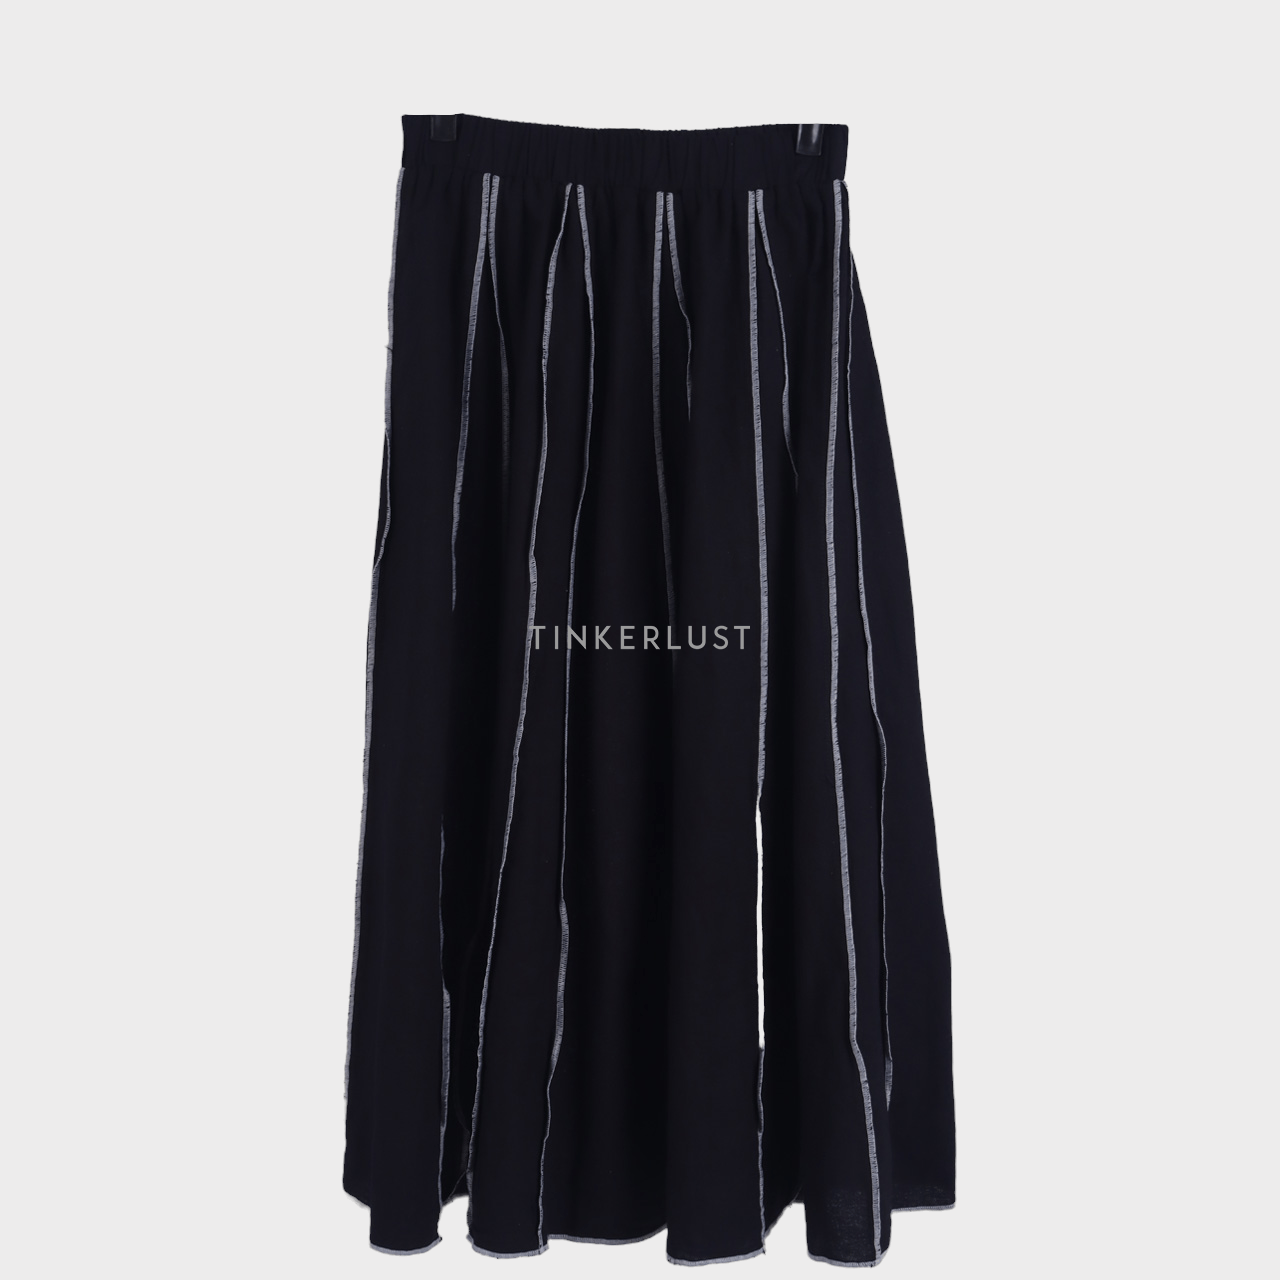 Morningsol Black Maxi Skirt